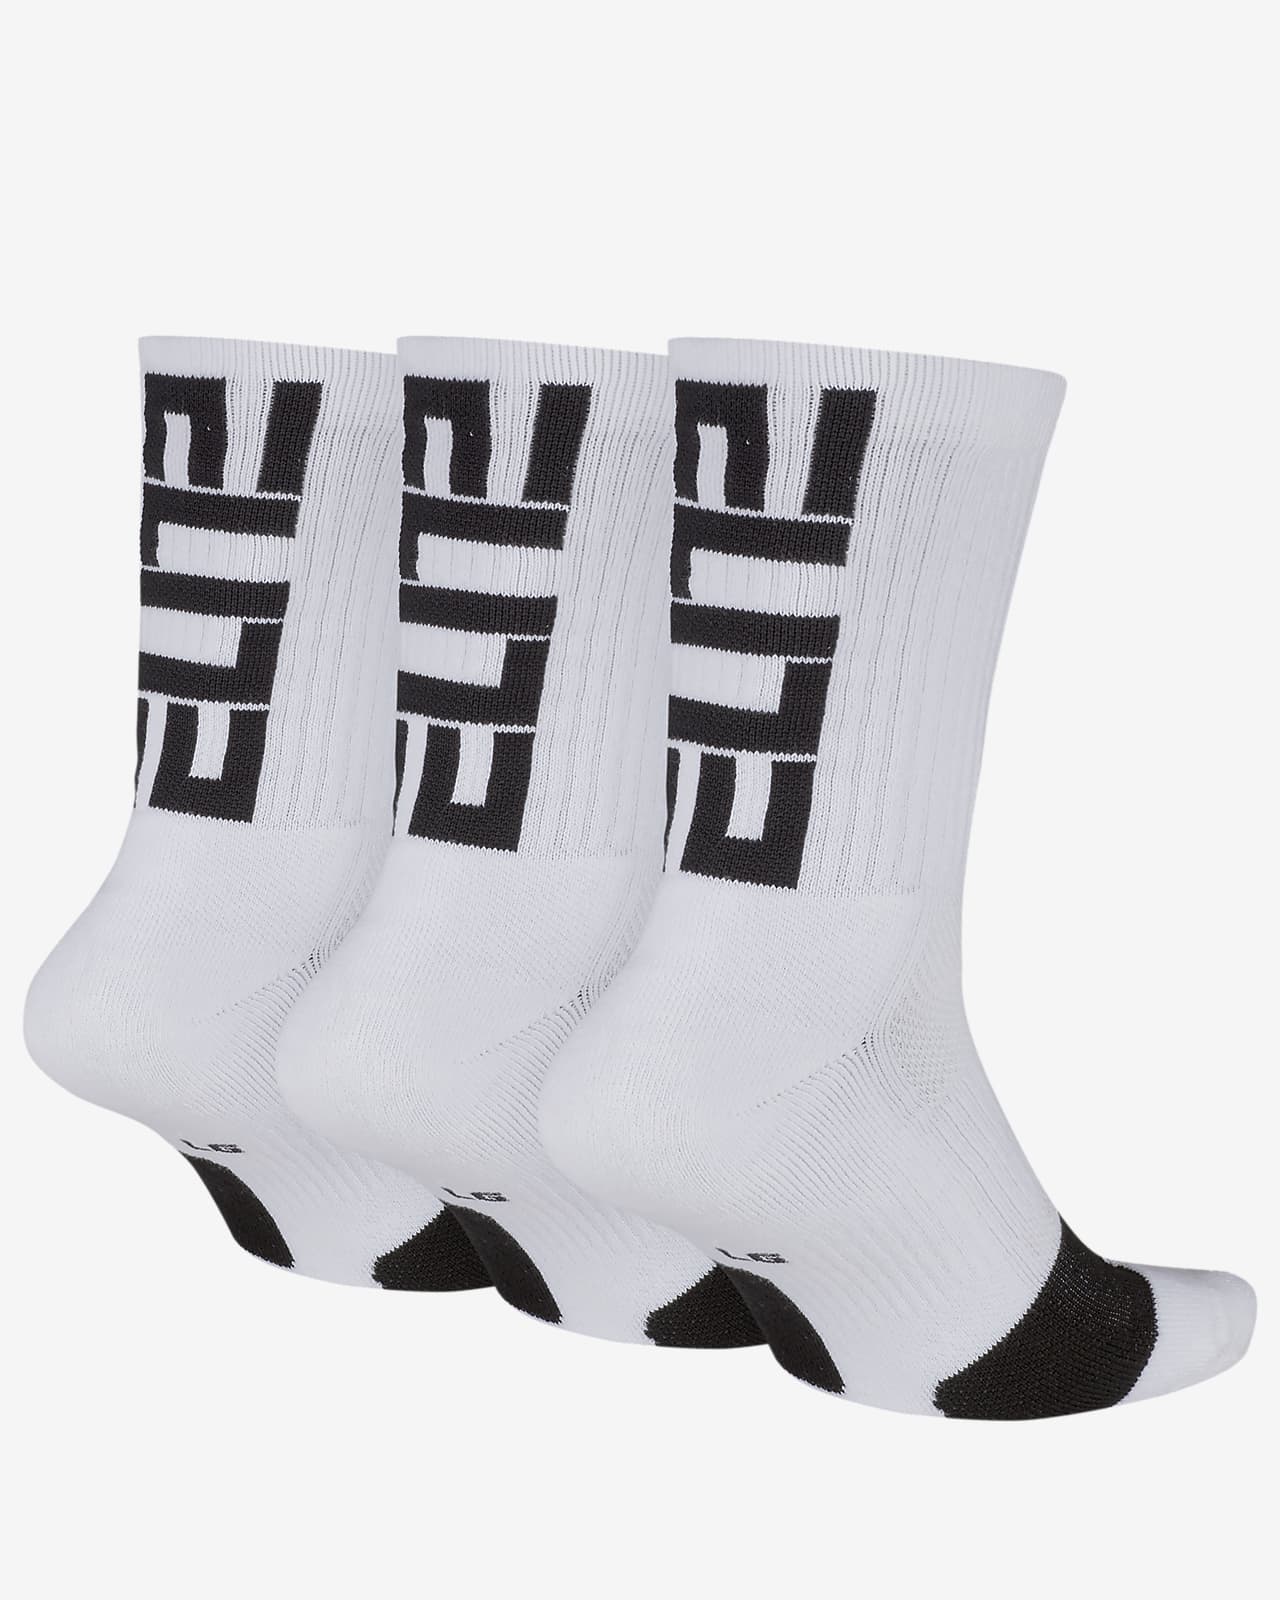 nike elite socks xl